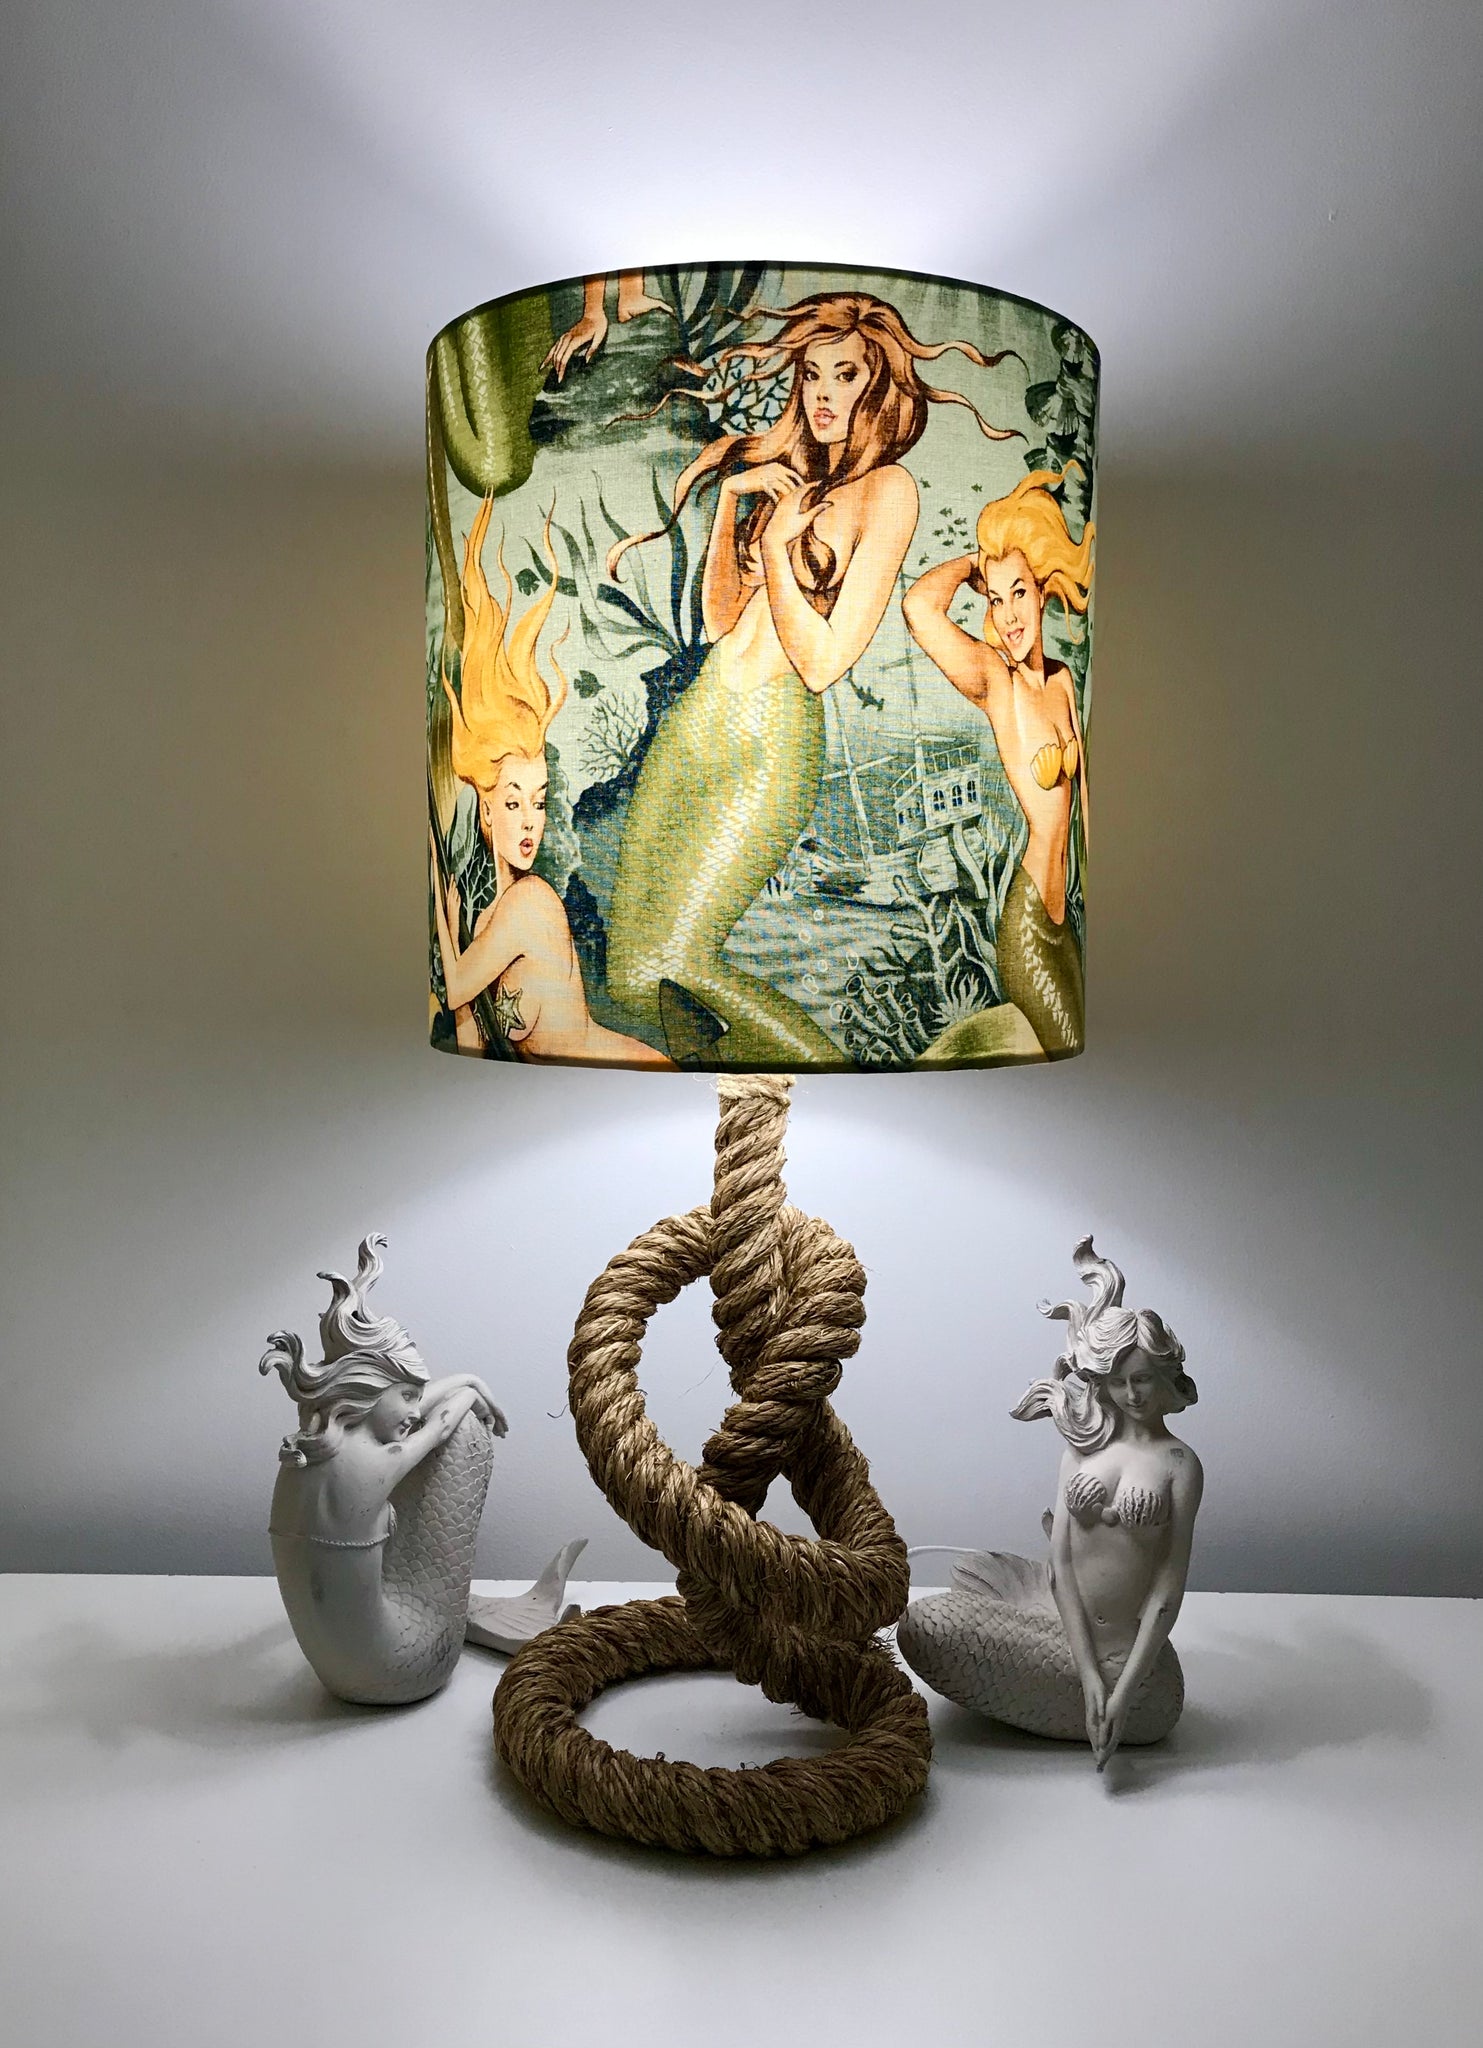 Mermaid Twisted Rope Table Lamp